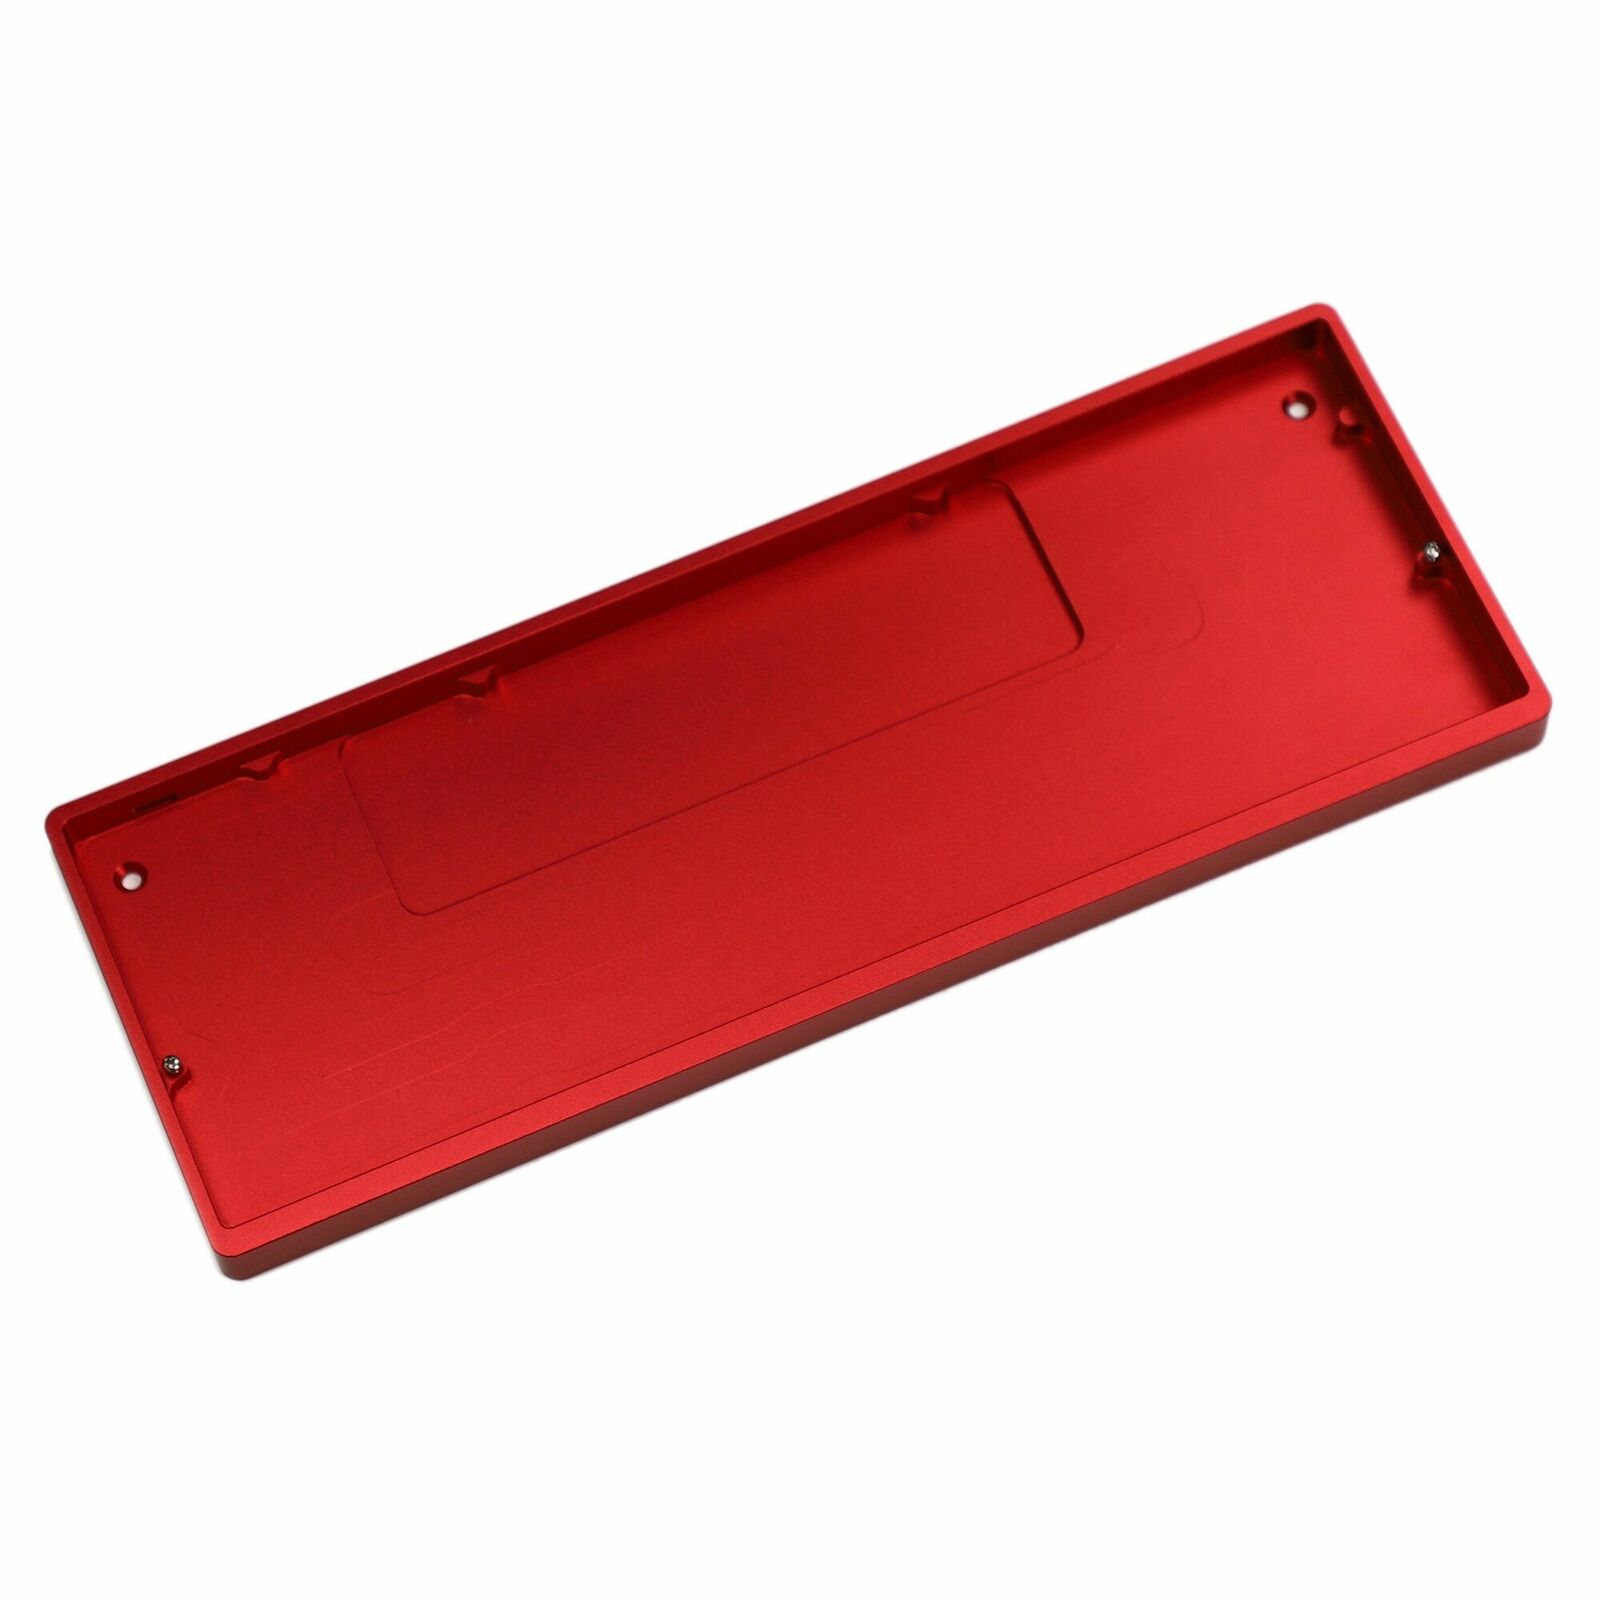 75 Keys Ortholinear Layout Qmk Anodized Aluminum Case Plate Hot-swappable Type C